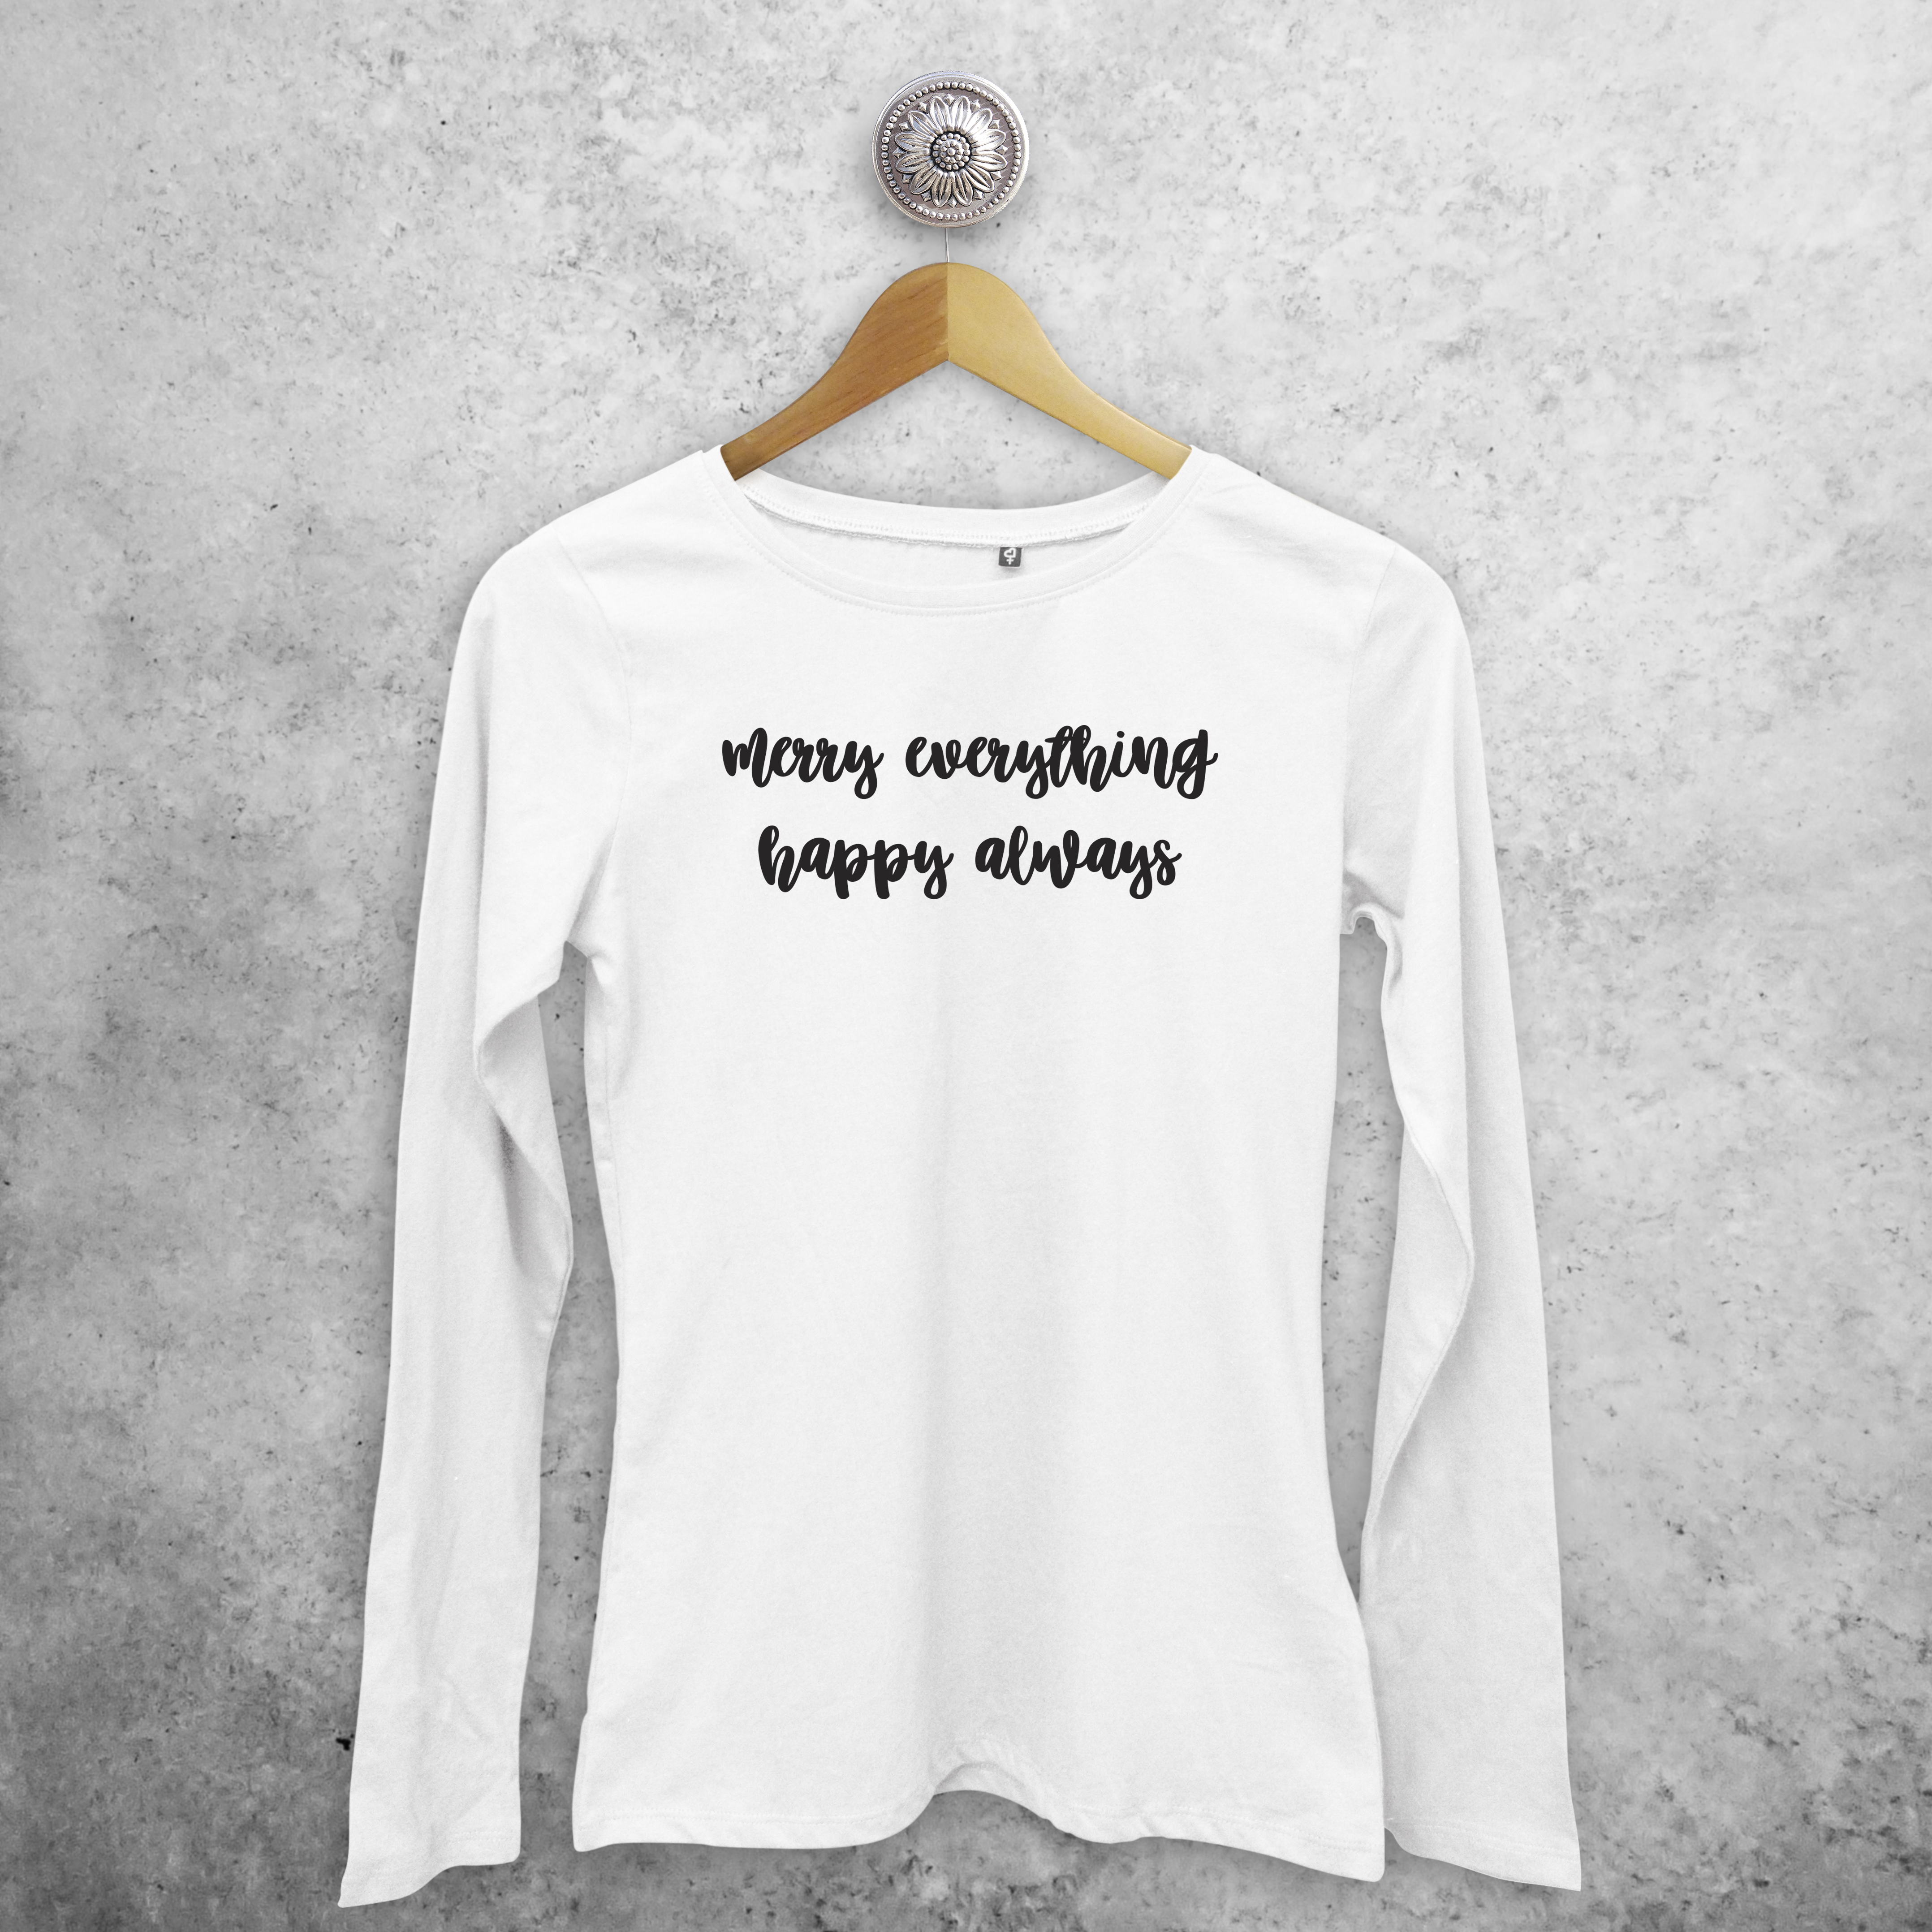 'Merry everything, Happy always' adult longsleeve shirt